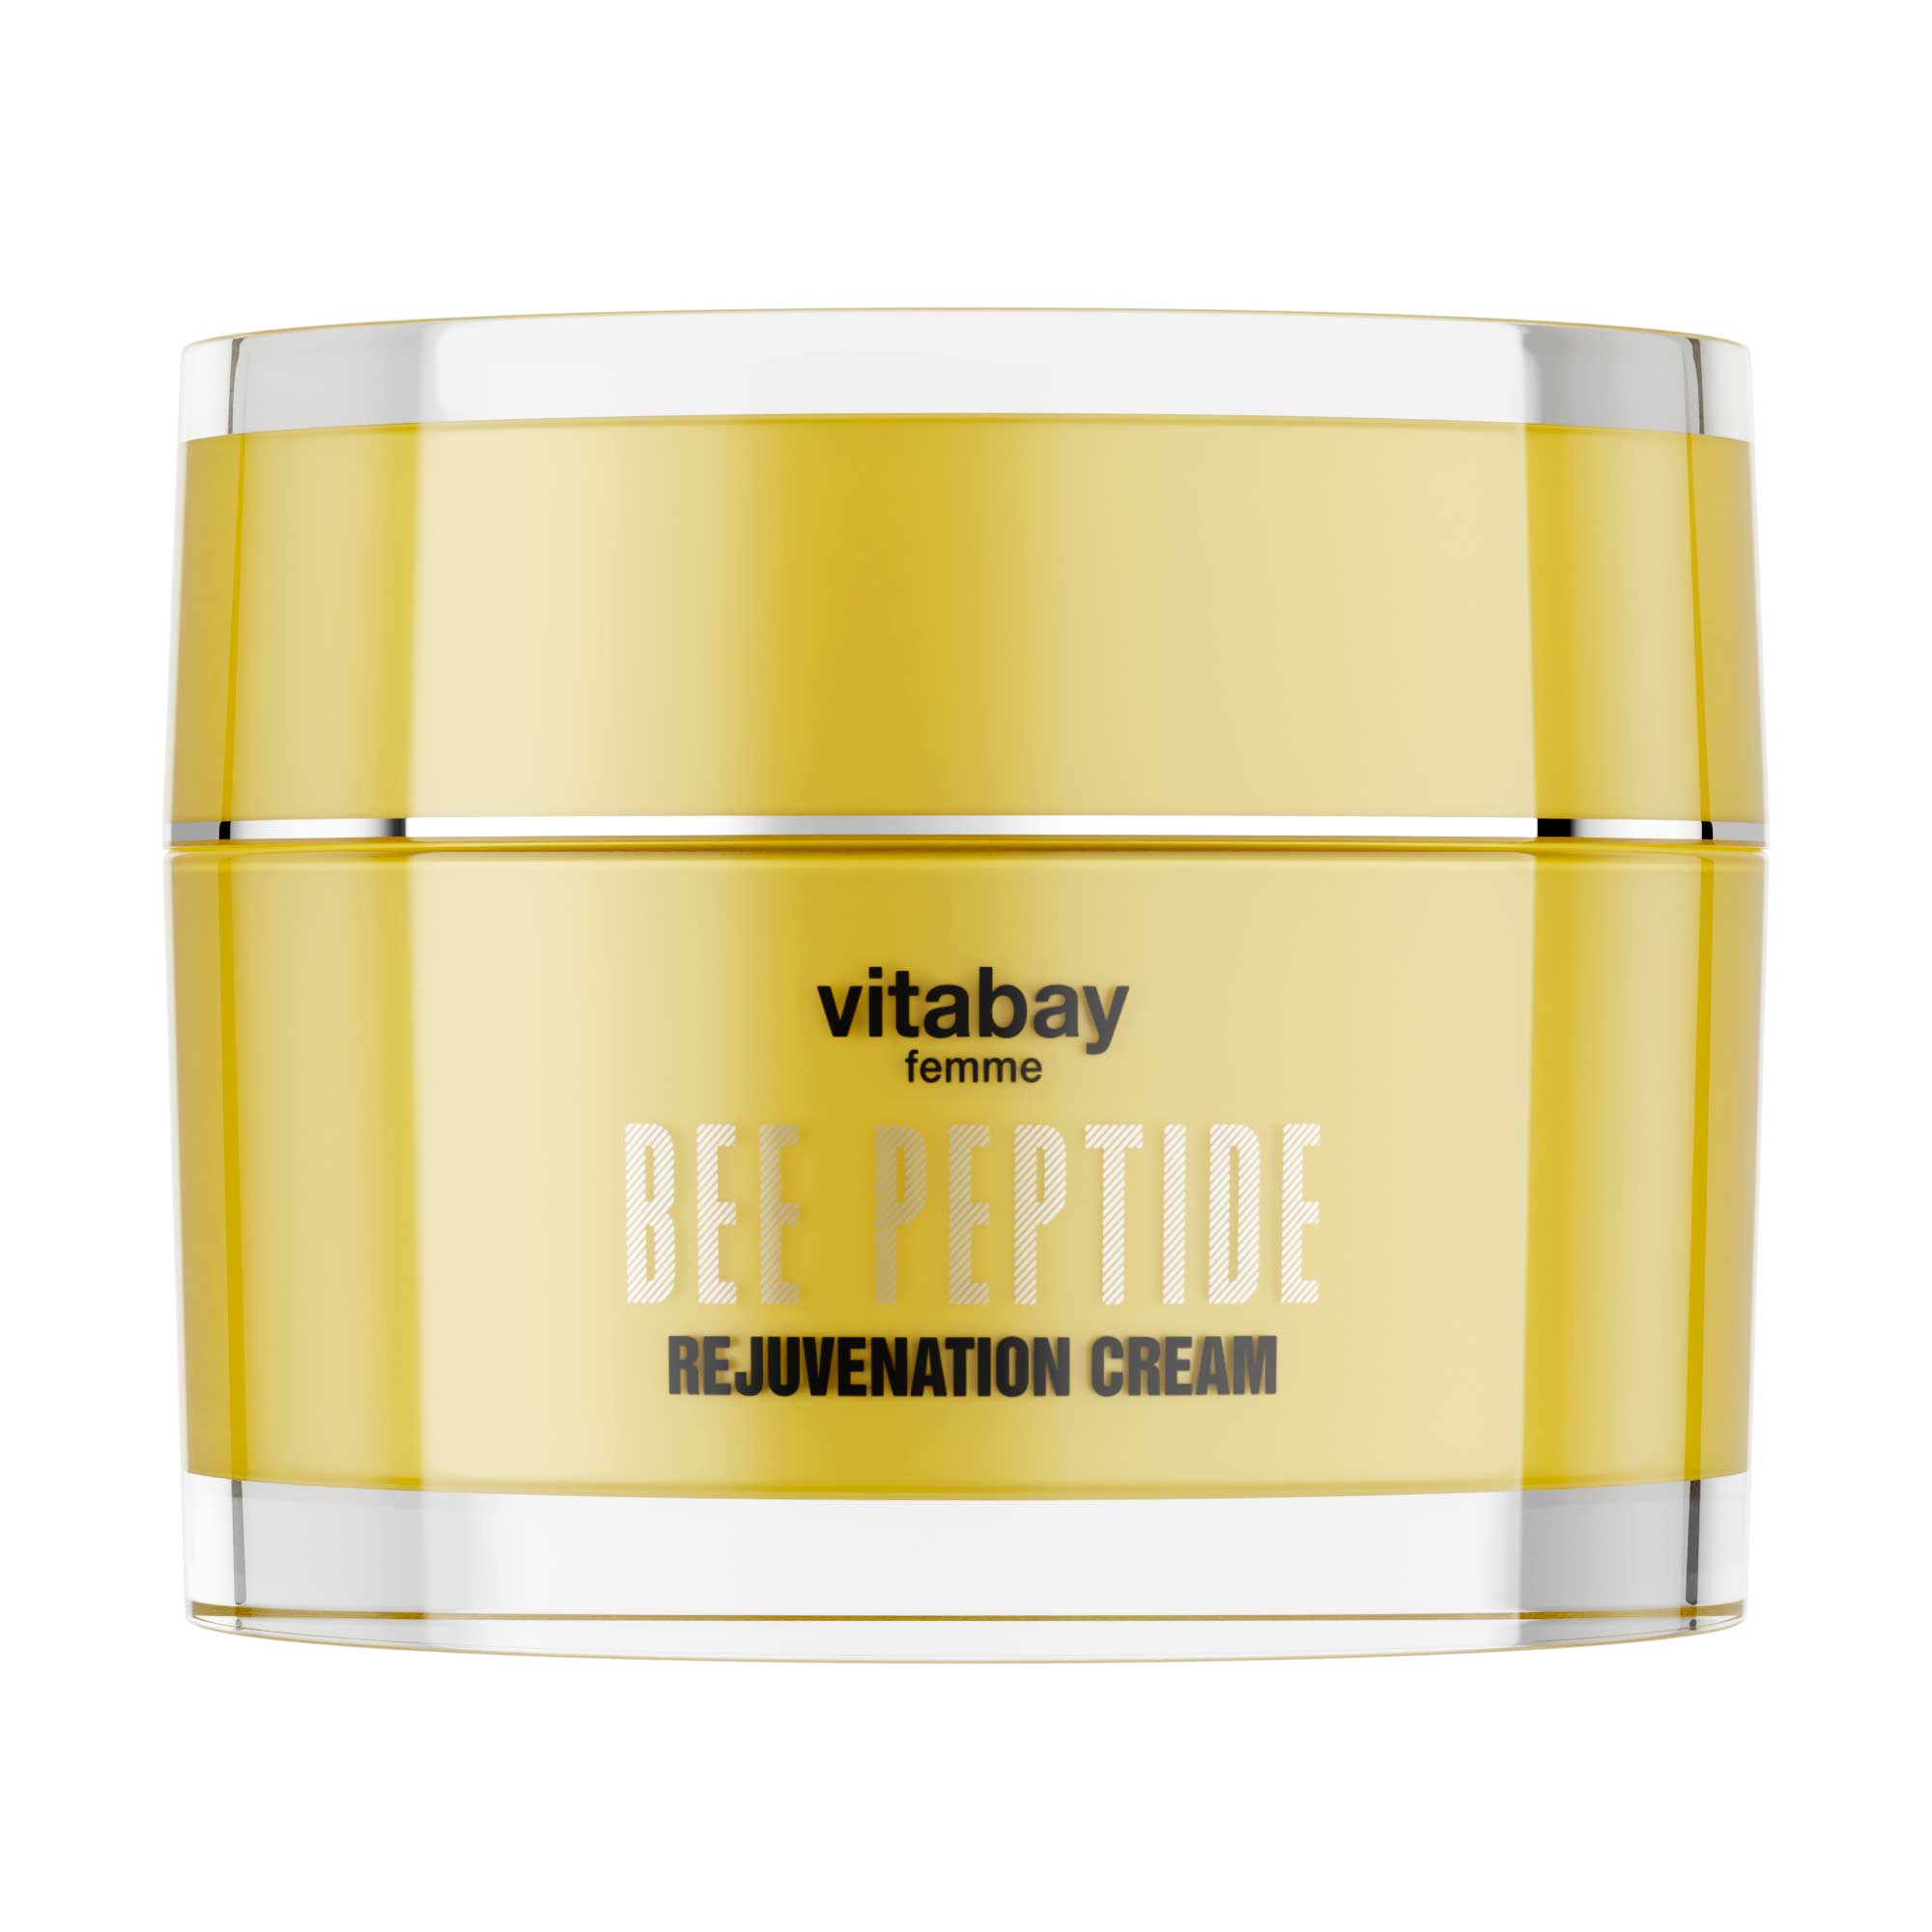 Bee Peptide Rejuvenation Cream - 50 ml